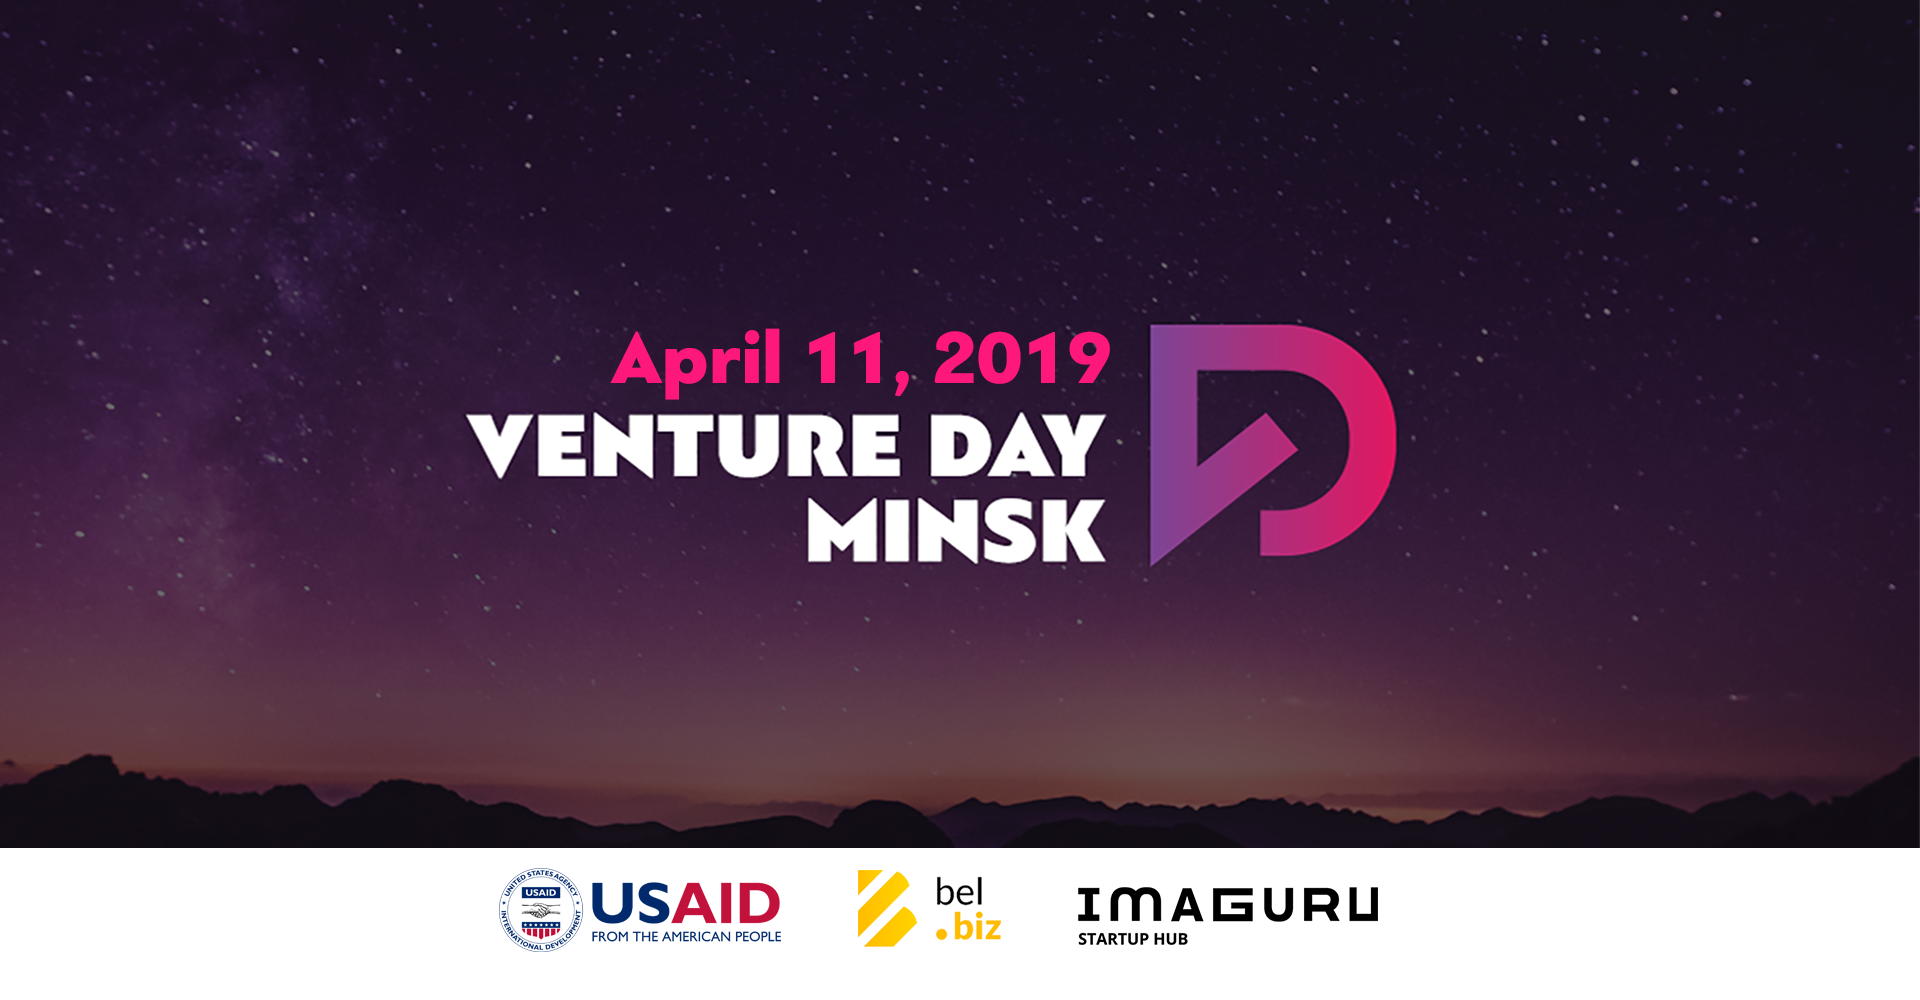 Venture Day Minsk 2019